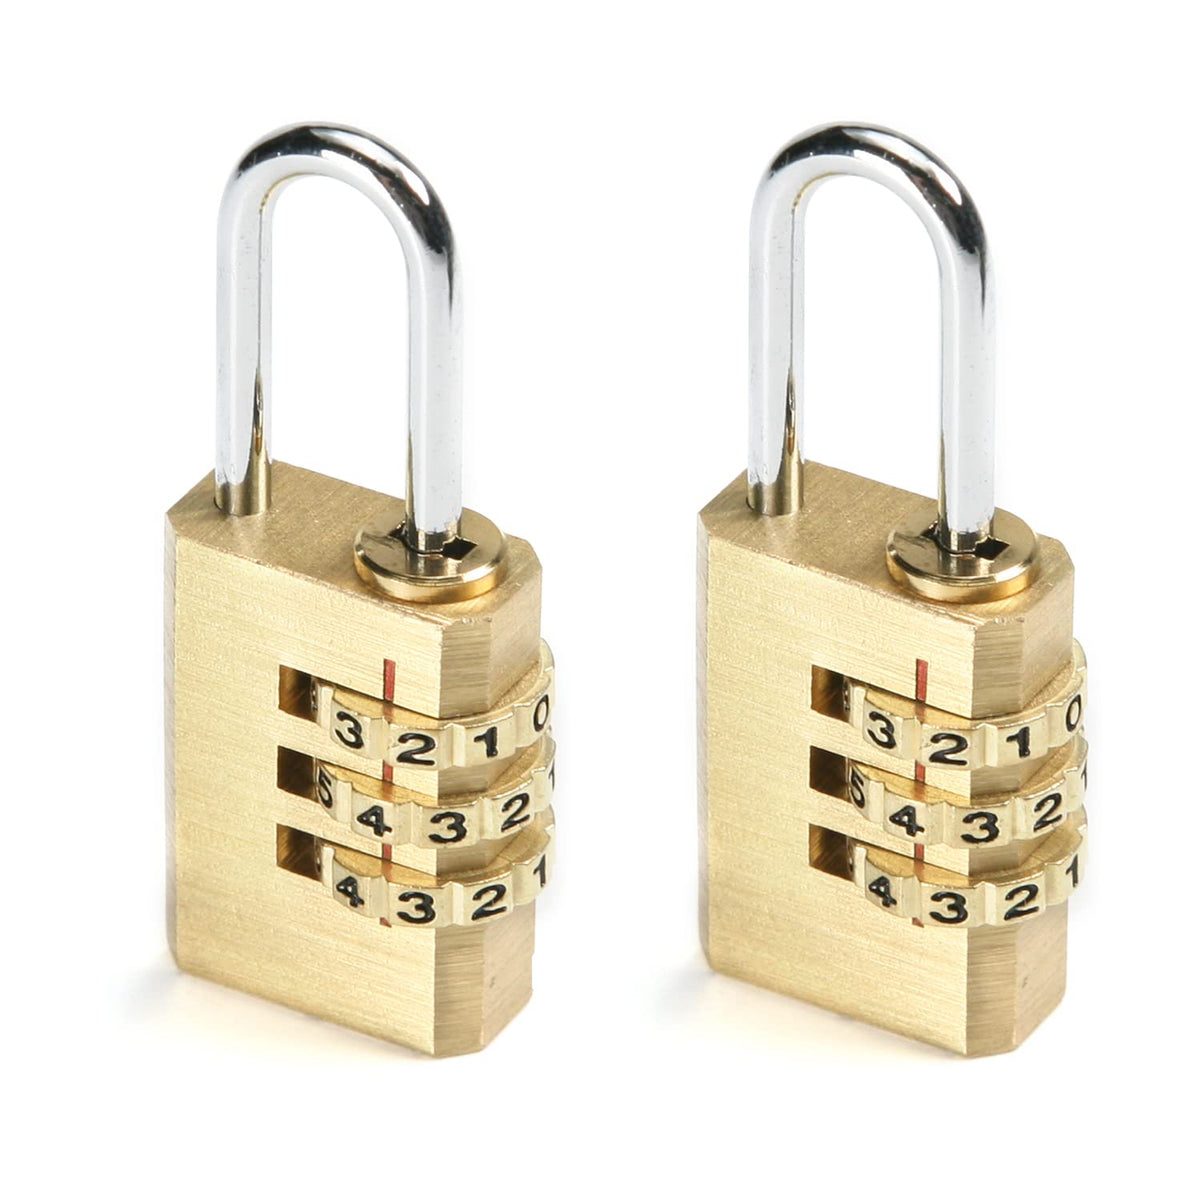 DELSWIN Combination Padlock Gym Locker Lock - 4 Digit Combination Lock —  CHIMIYA